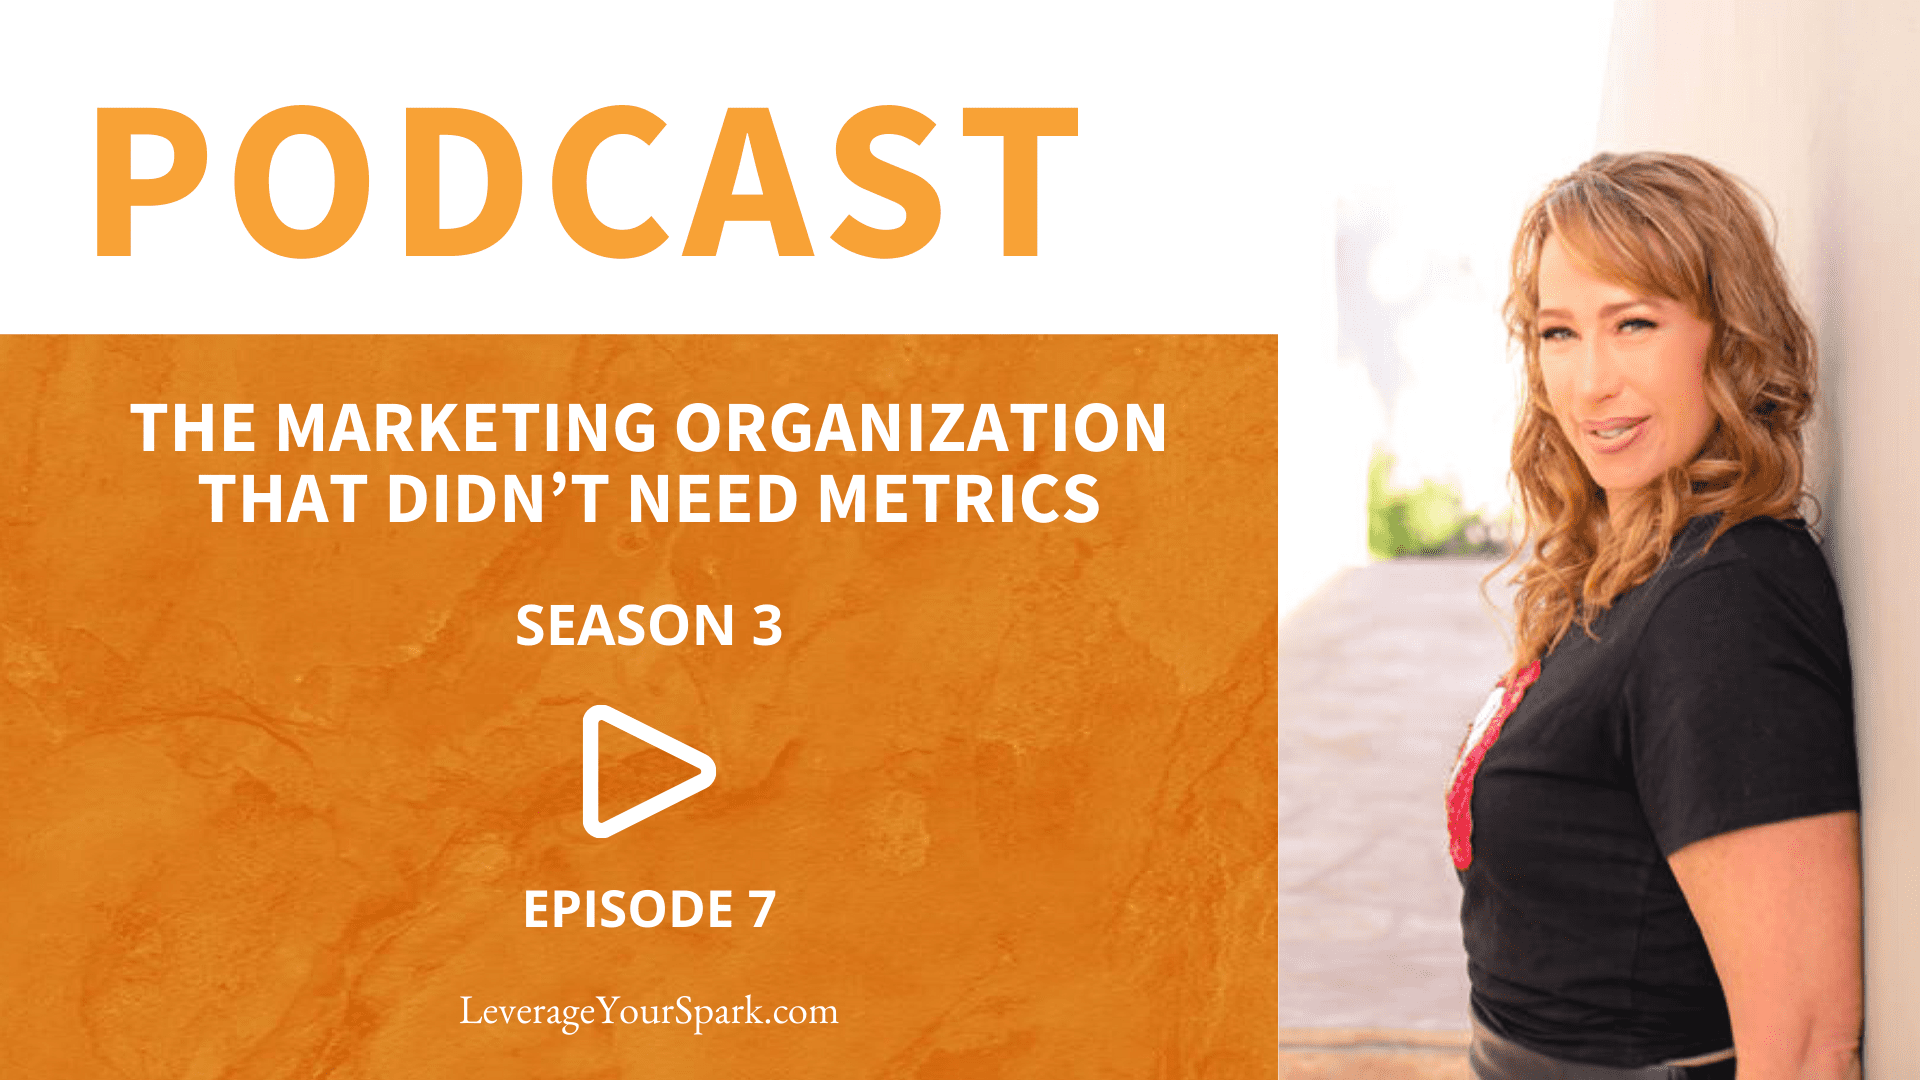 The Marketing Organization that Didn’t Need Metrics